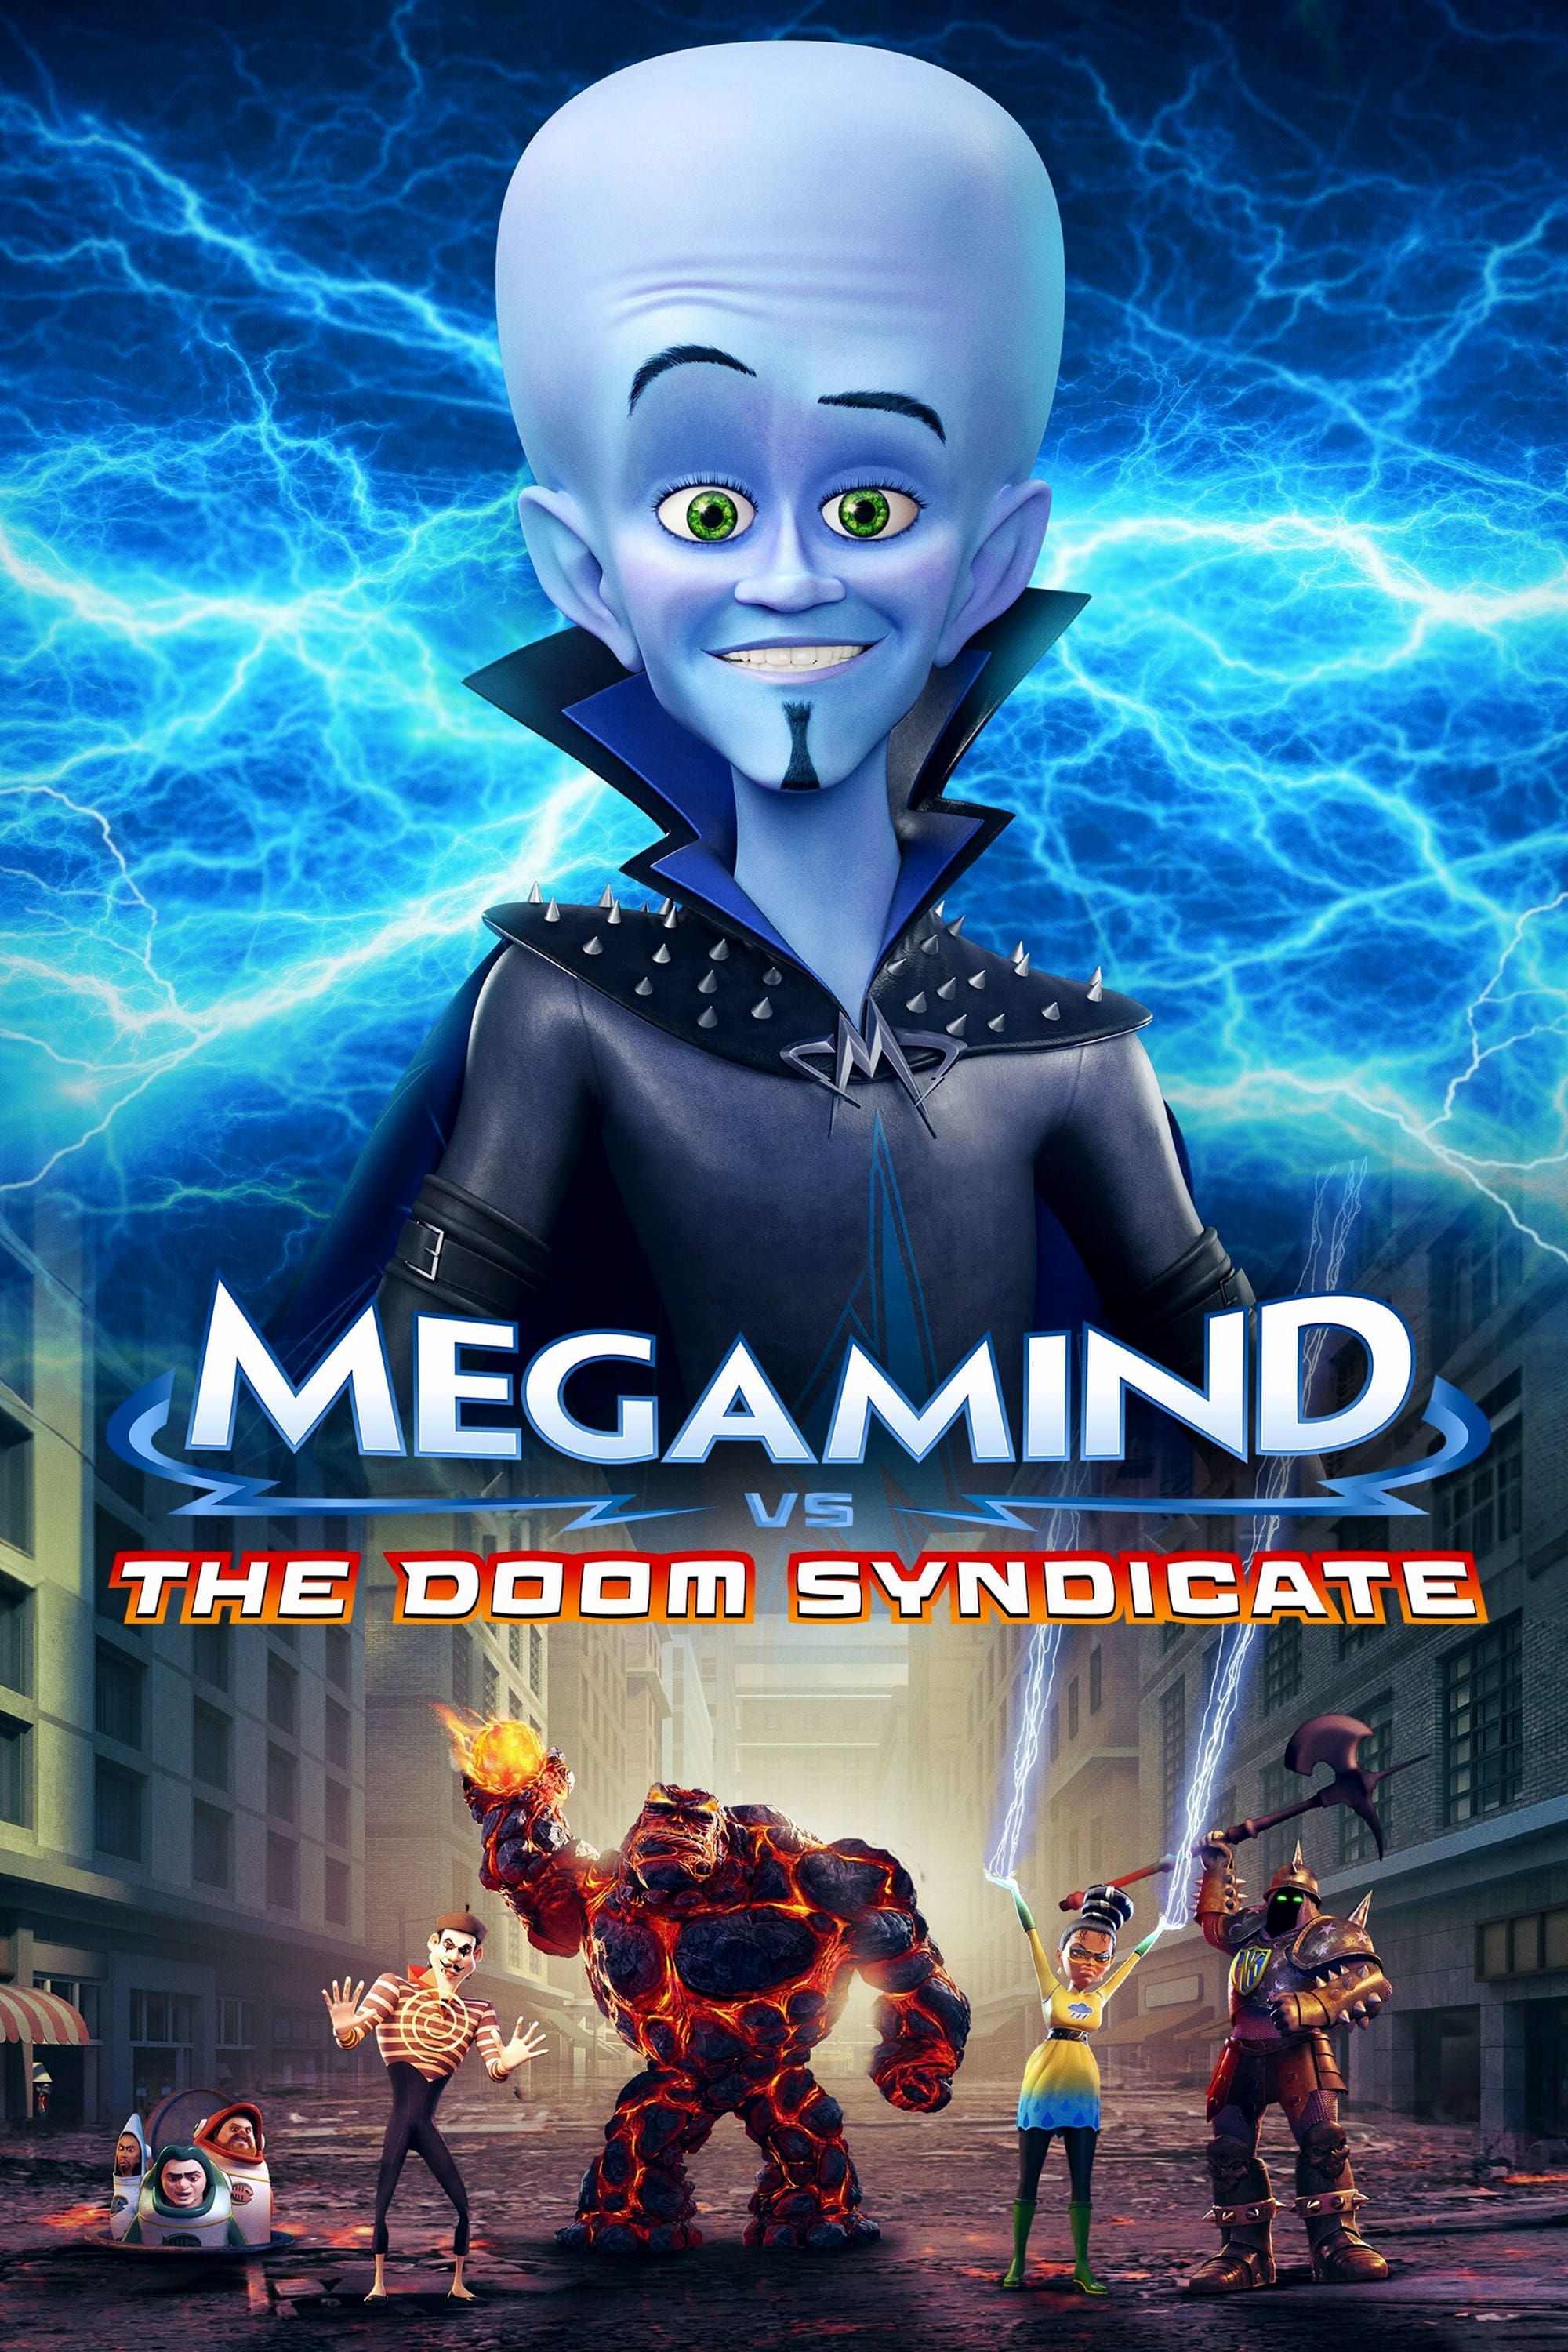 Megamind vs. the Doom Syndicate film